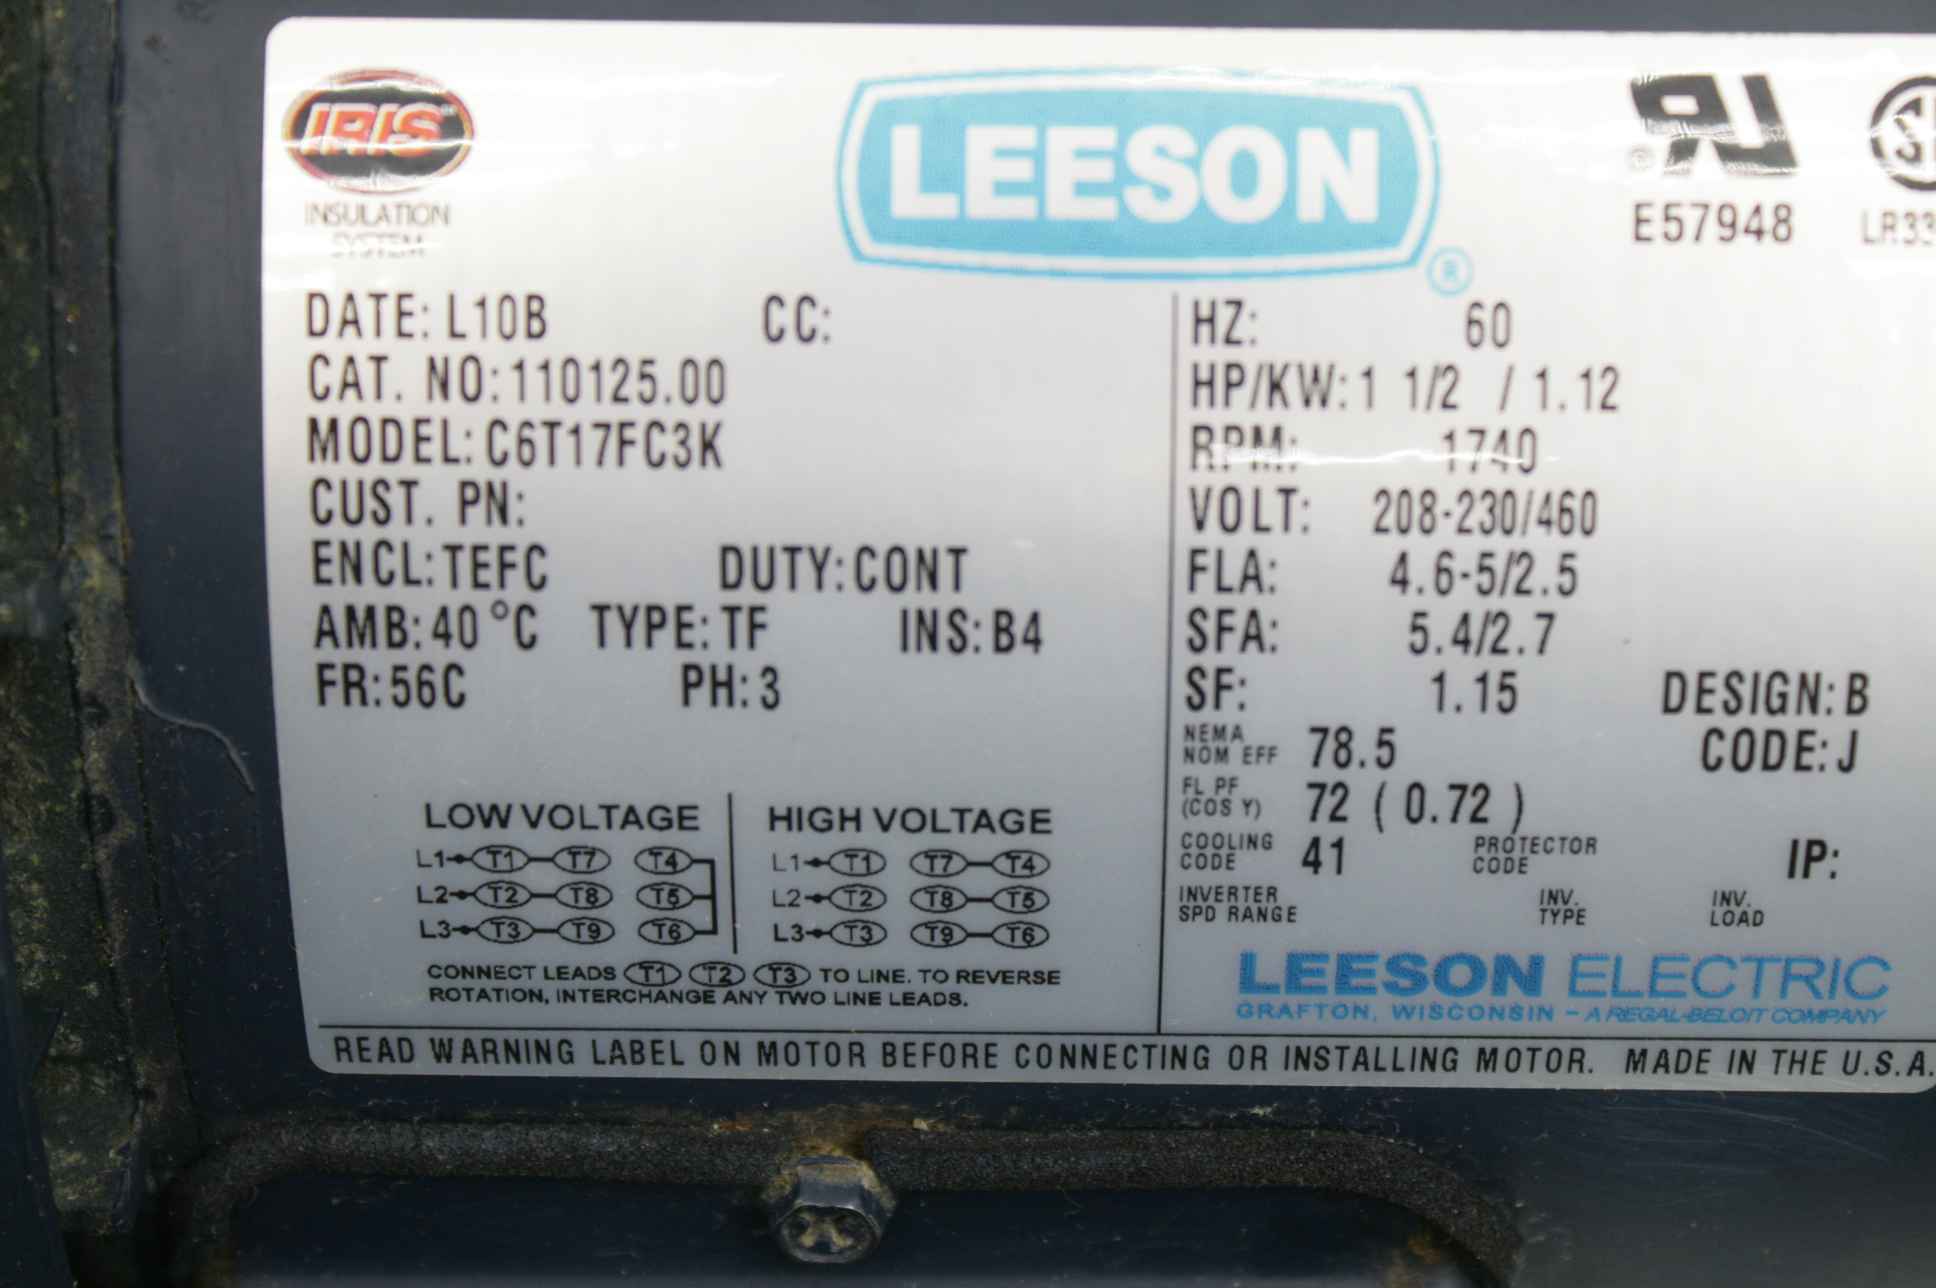 Leeson 1740 RPM 3PH Motor C6T17FC3K w/ IronMan Gear Reducer GR 